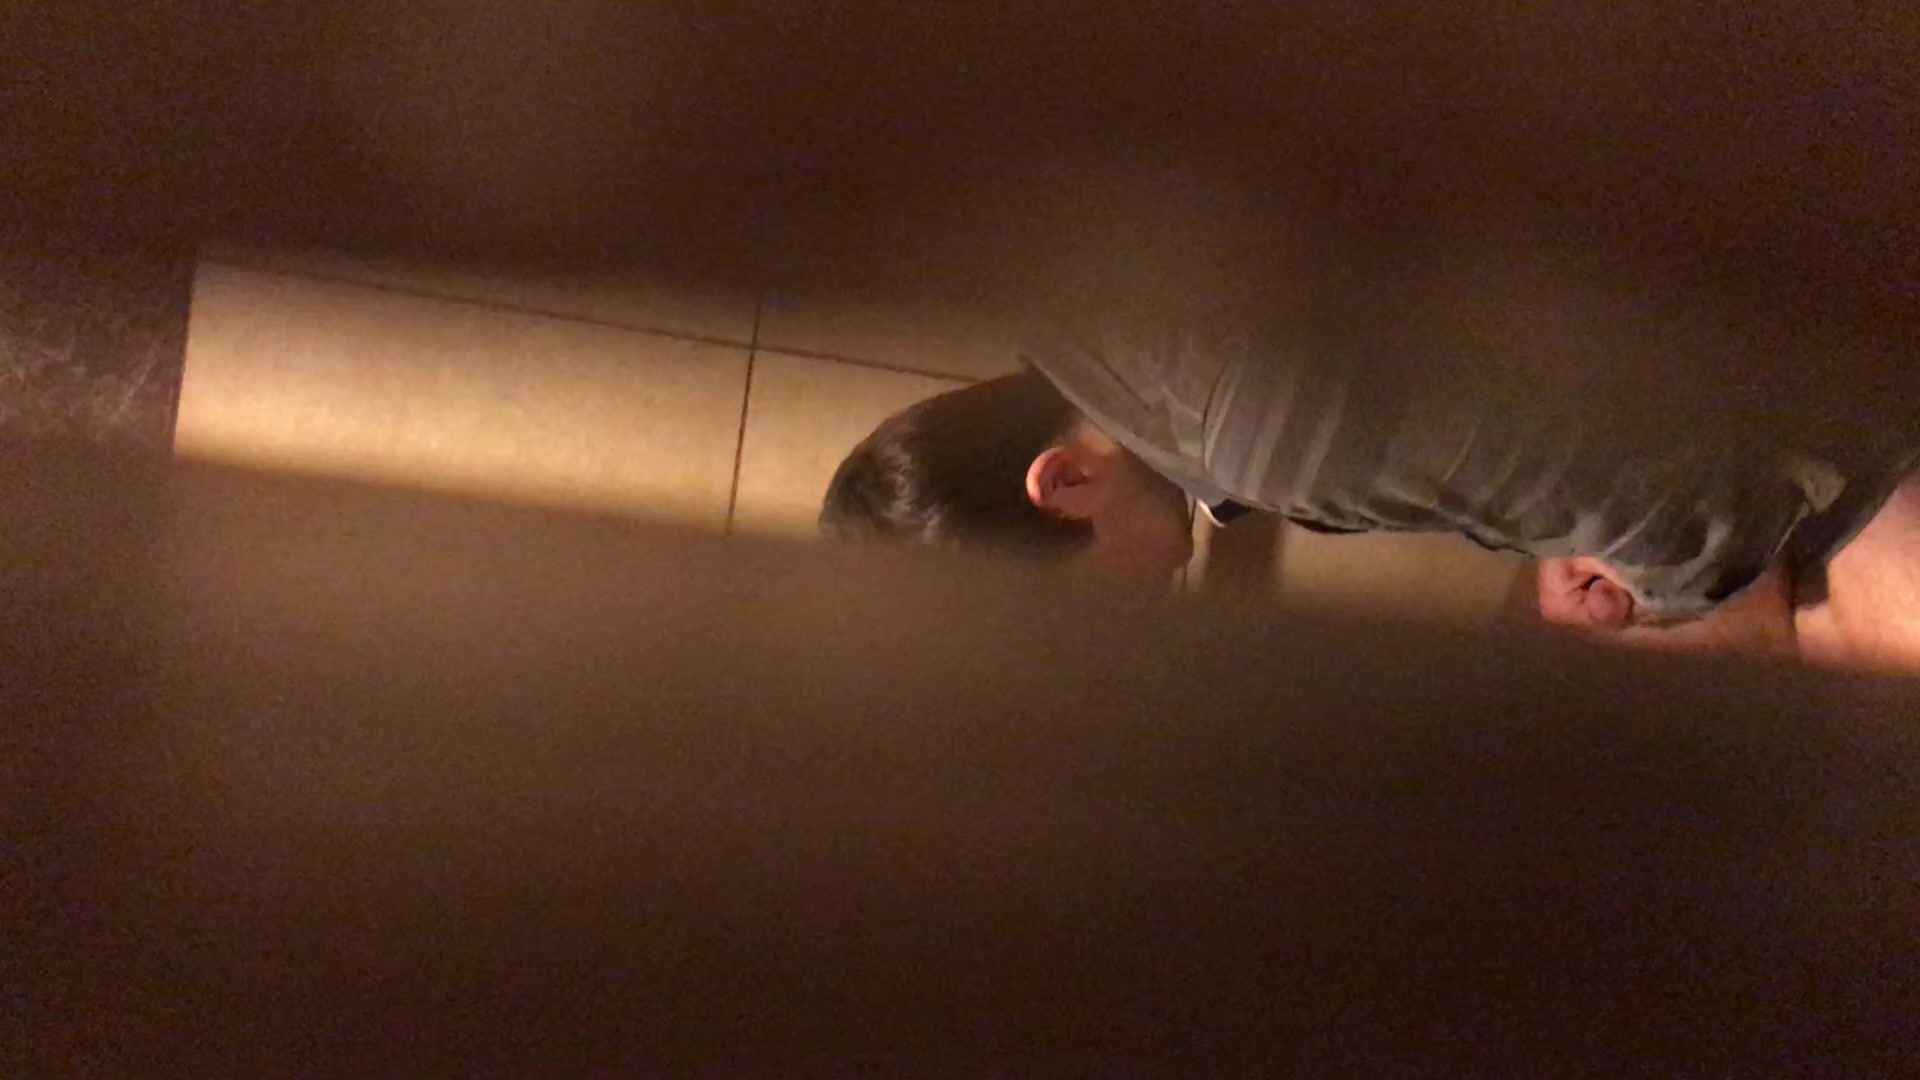 spy guy on toilet in the restaurant